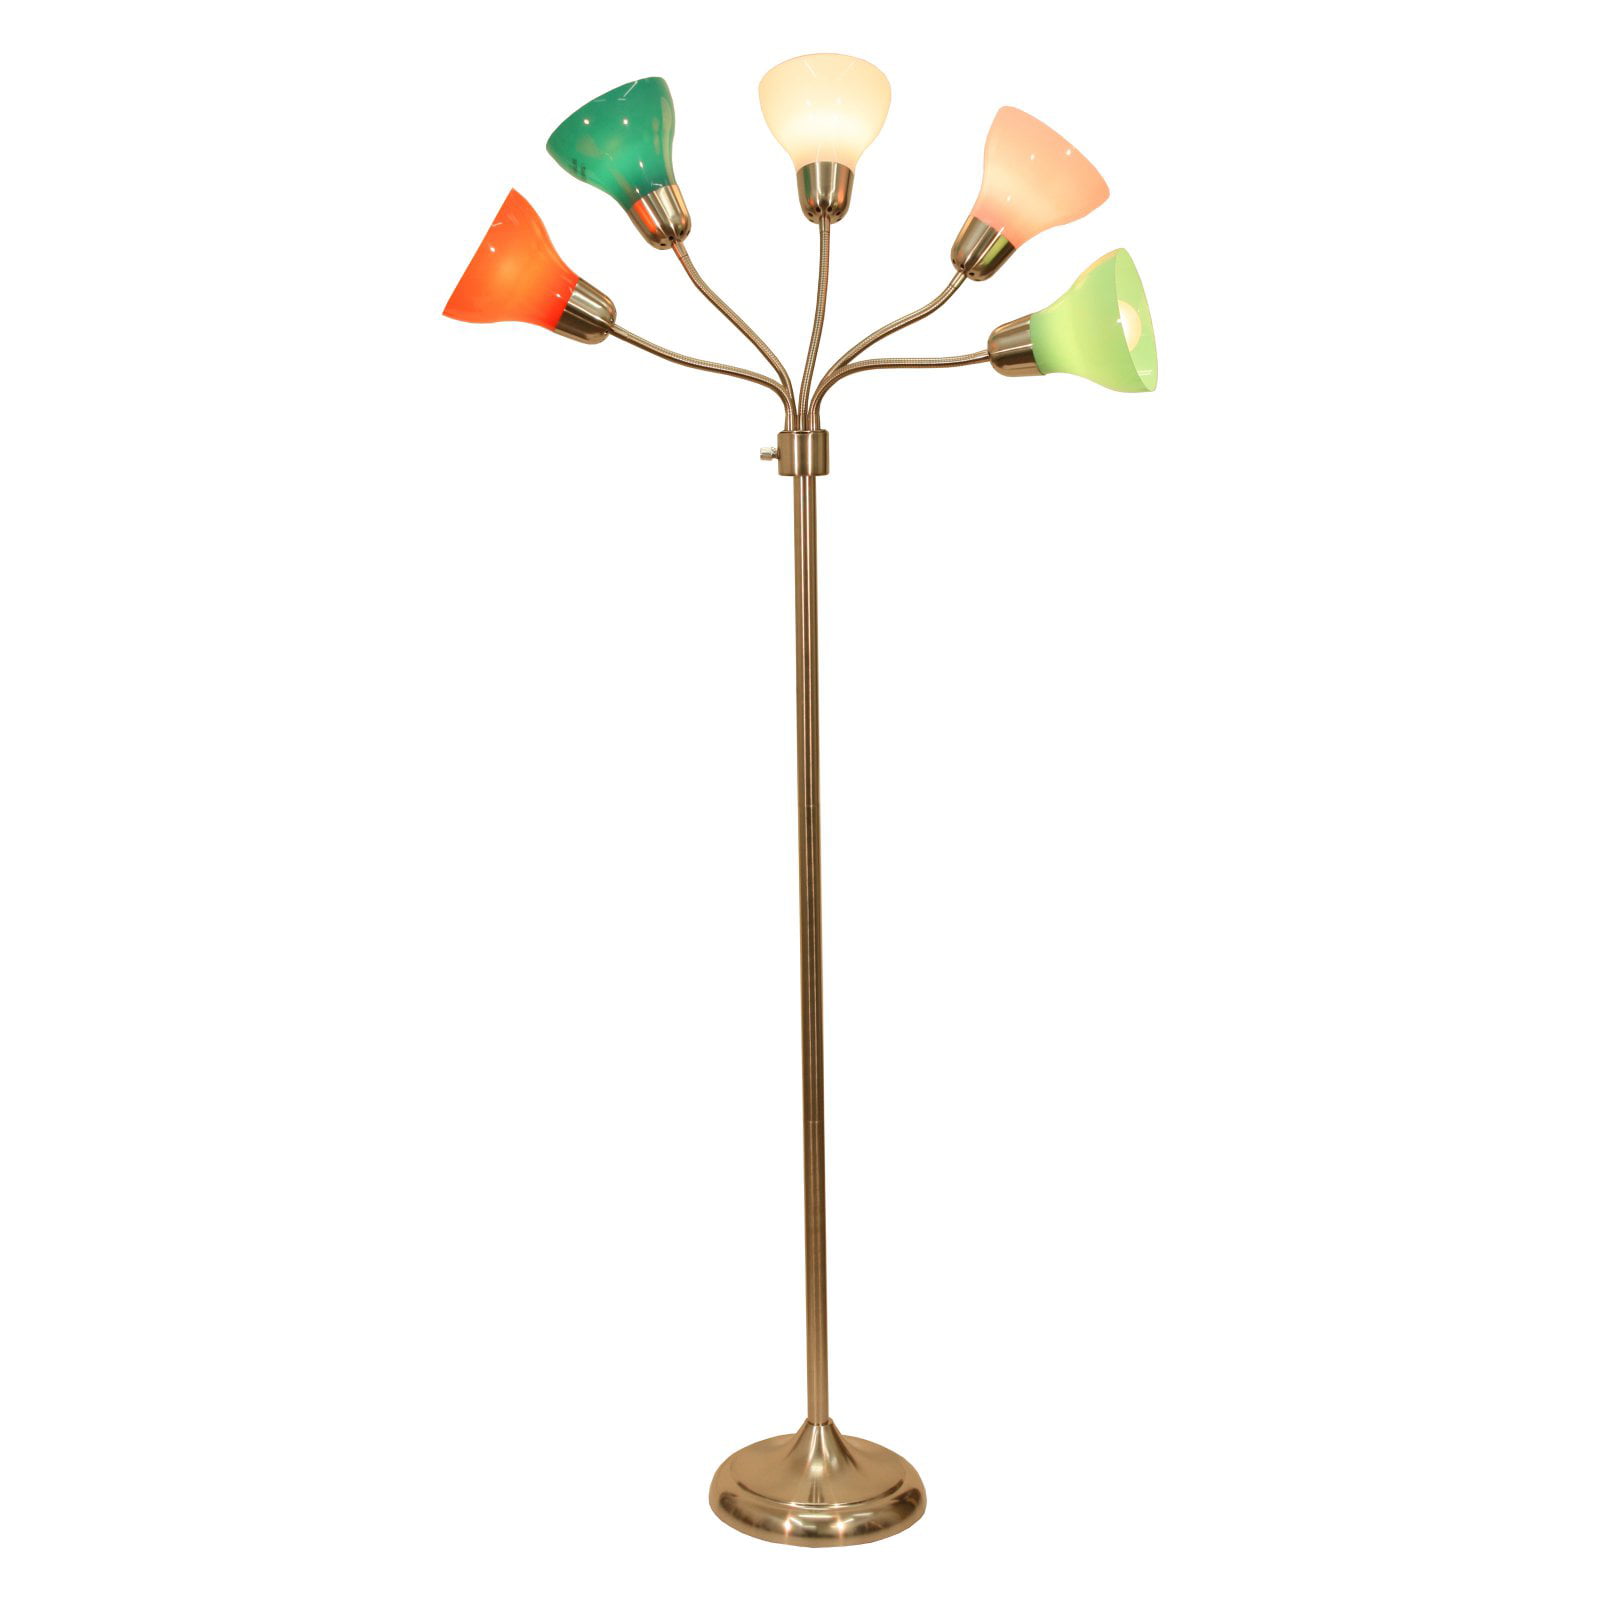 5 Light Floor Lamp With Multi Colored Shades Walmart Com